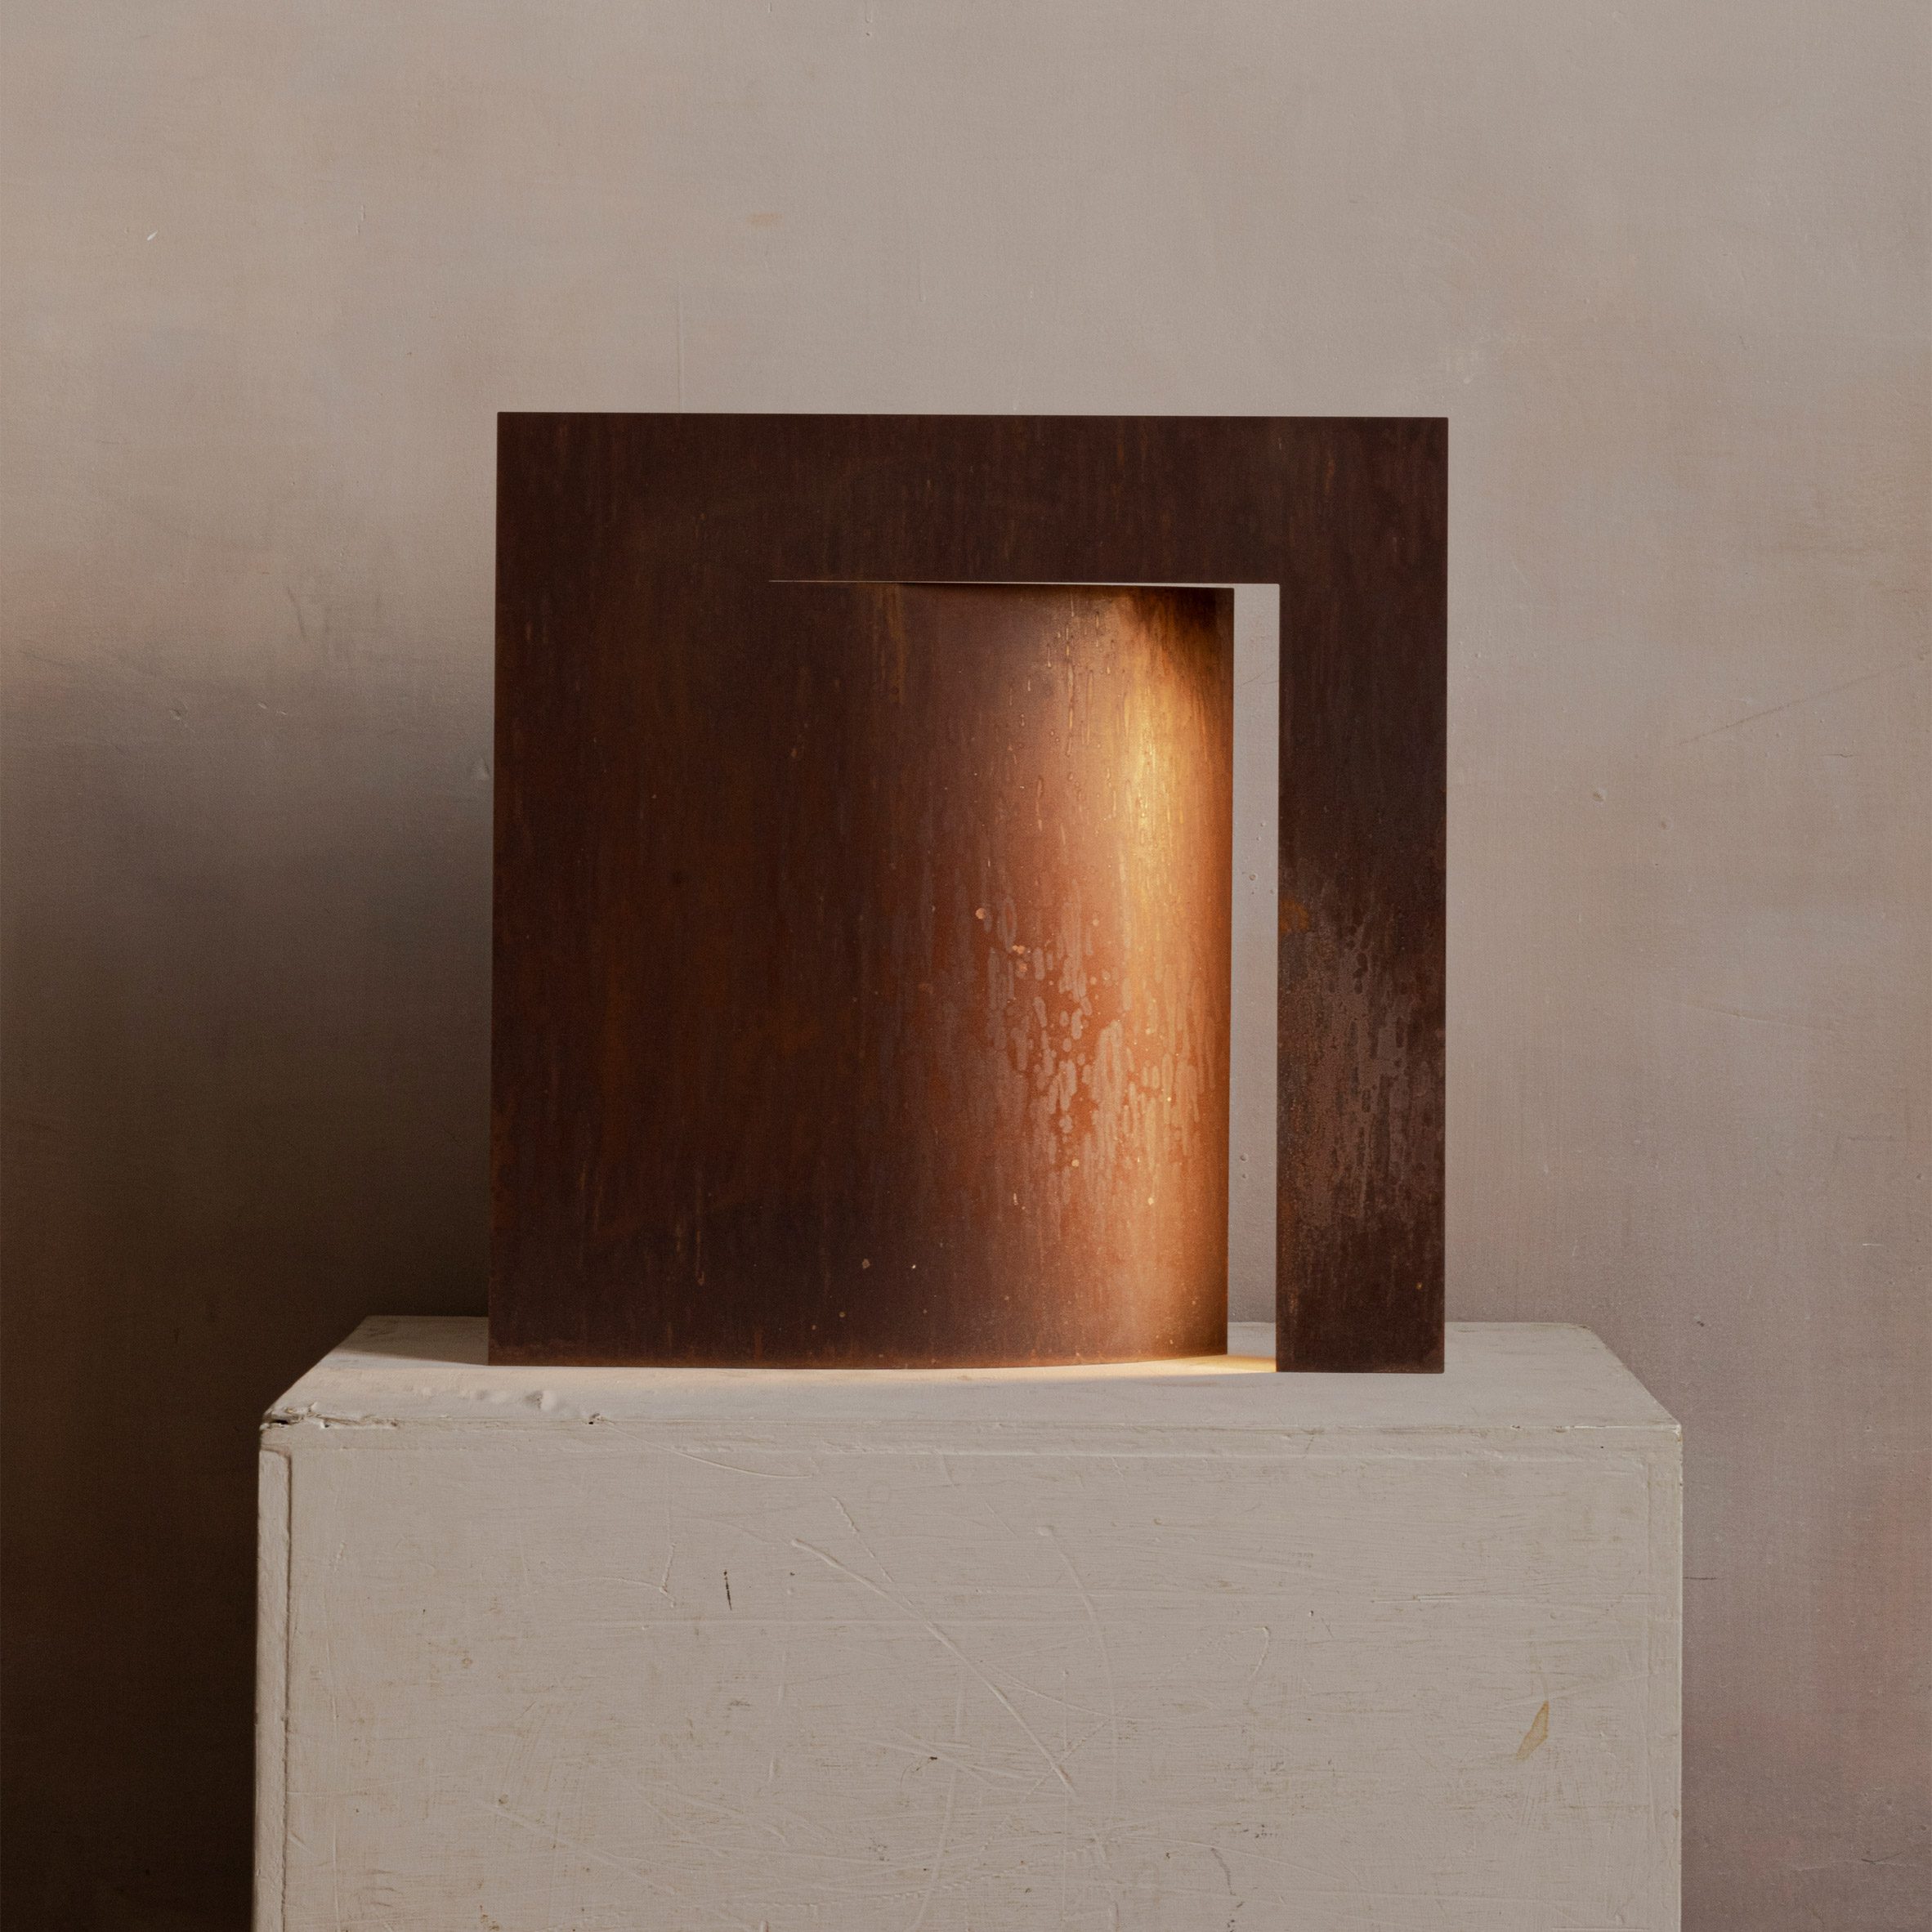 Manu Bañó designs lamp using a sheet of oxidised steel